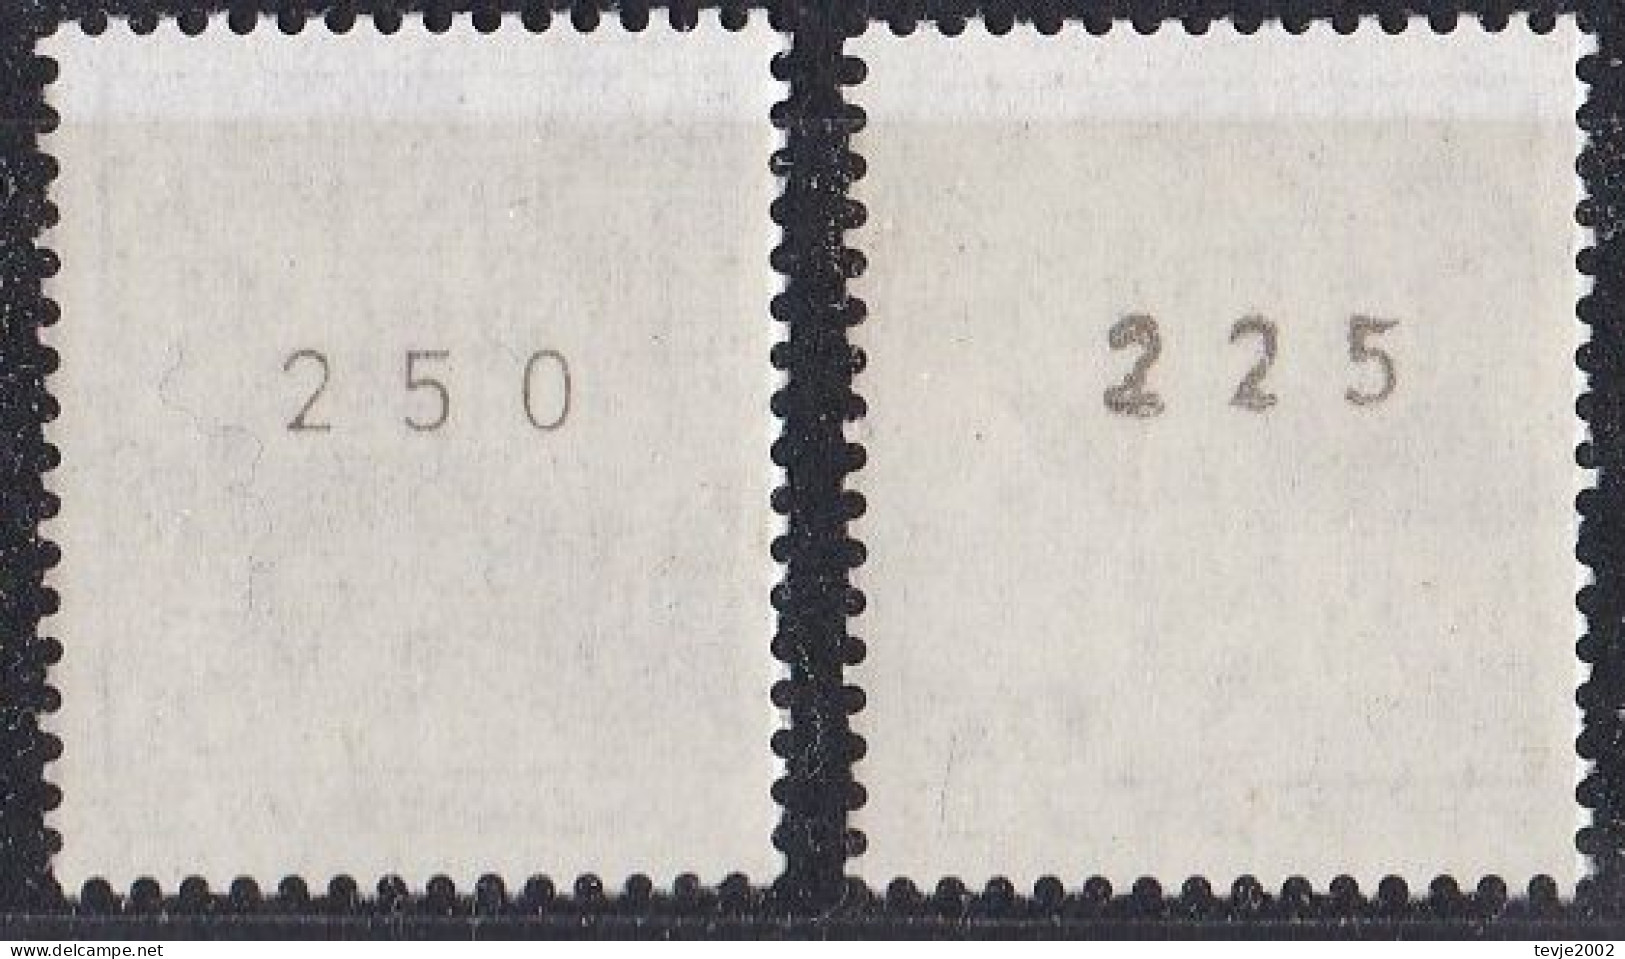 Berlin 1987 - Rollenmarken Mi.Nr. 532 AII + 534 AII - Postfrisch MNH - Letterset Mit Nummern - Rollenmarken